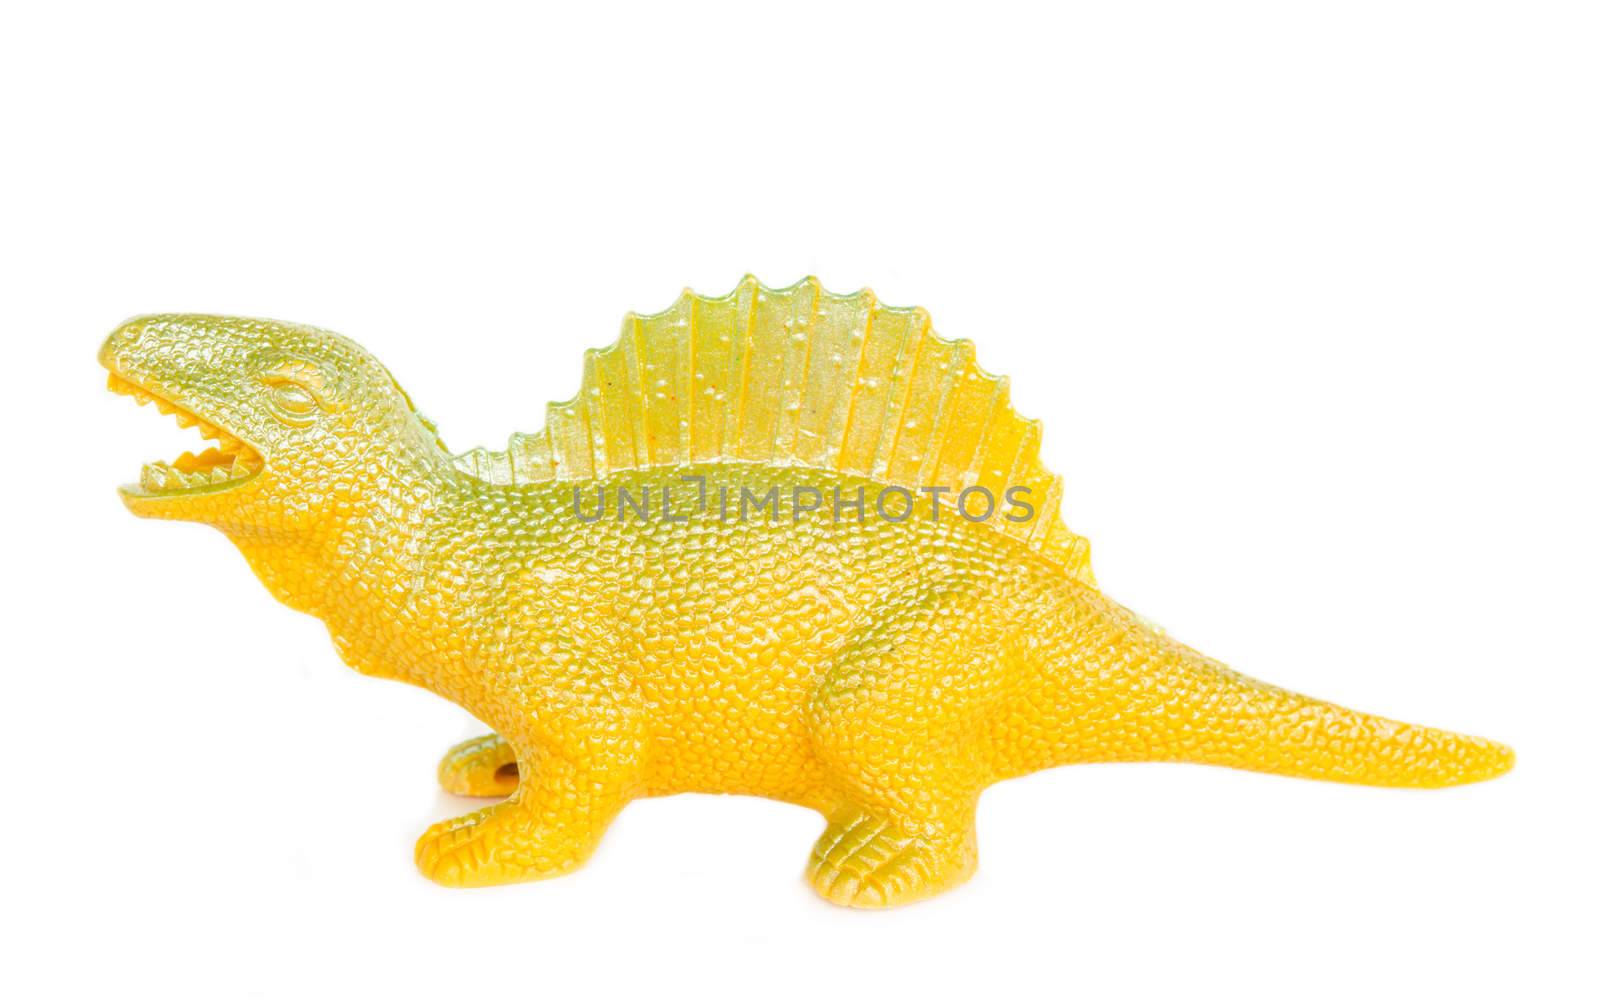 Dinosaur plastic figure toy model on white background.